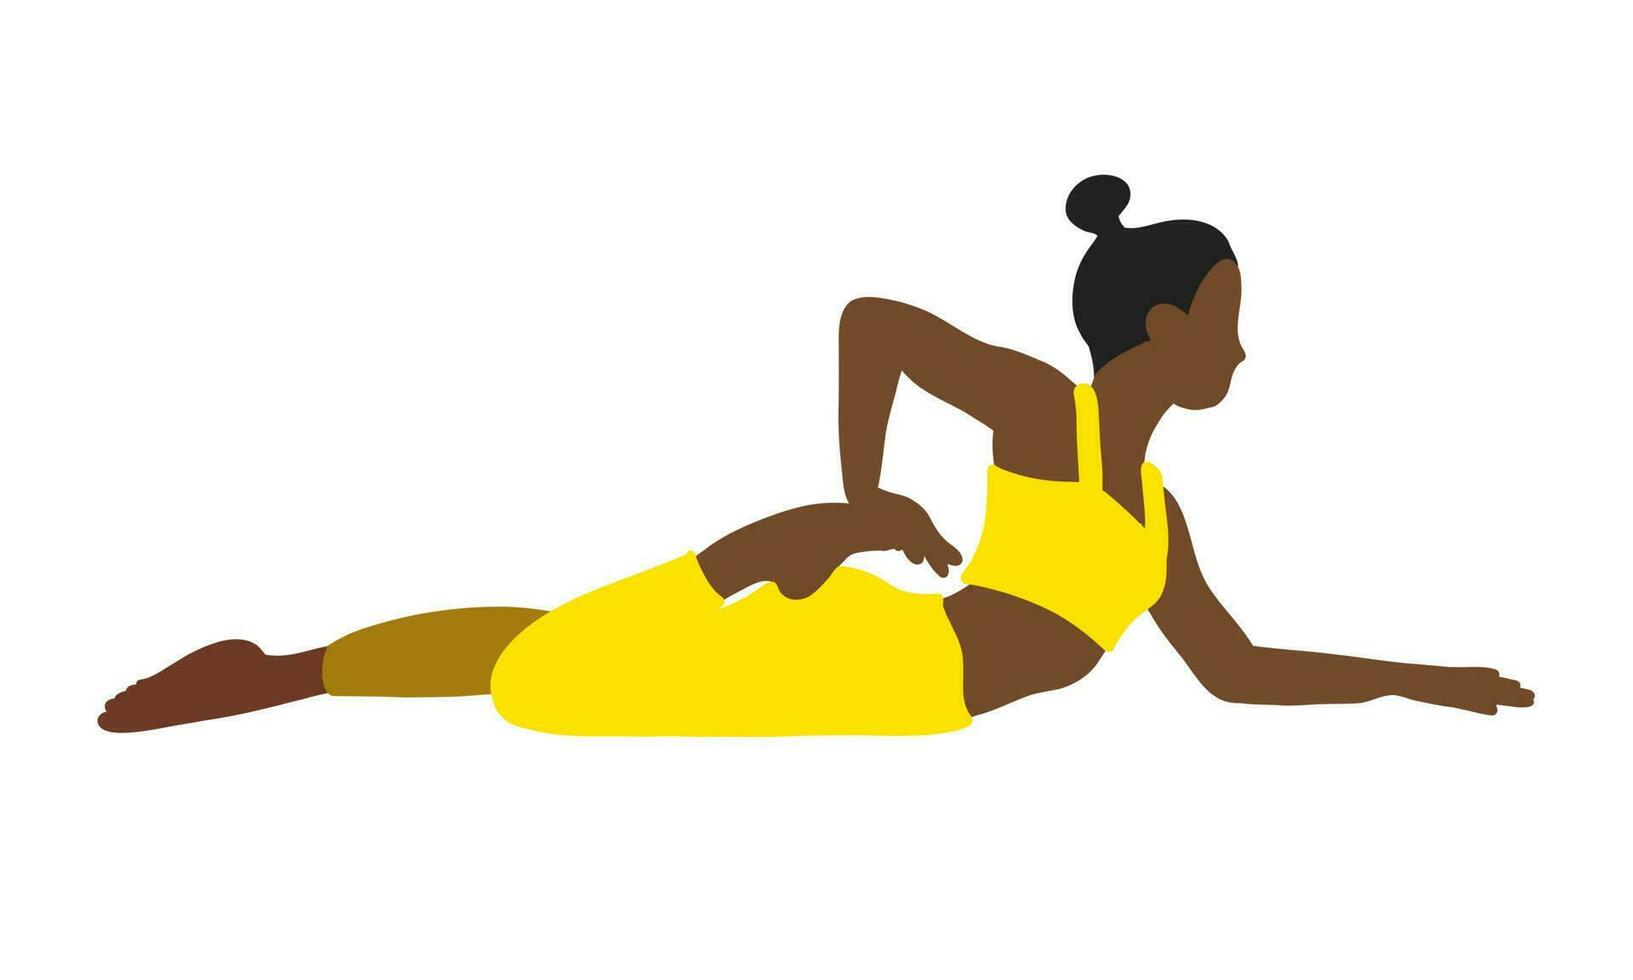 Yoga pose in cartoon flat style vector